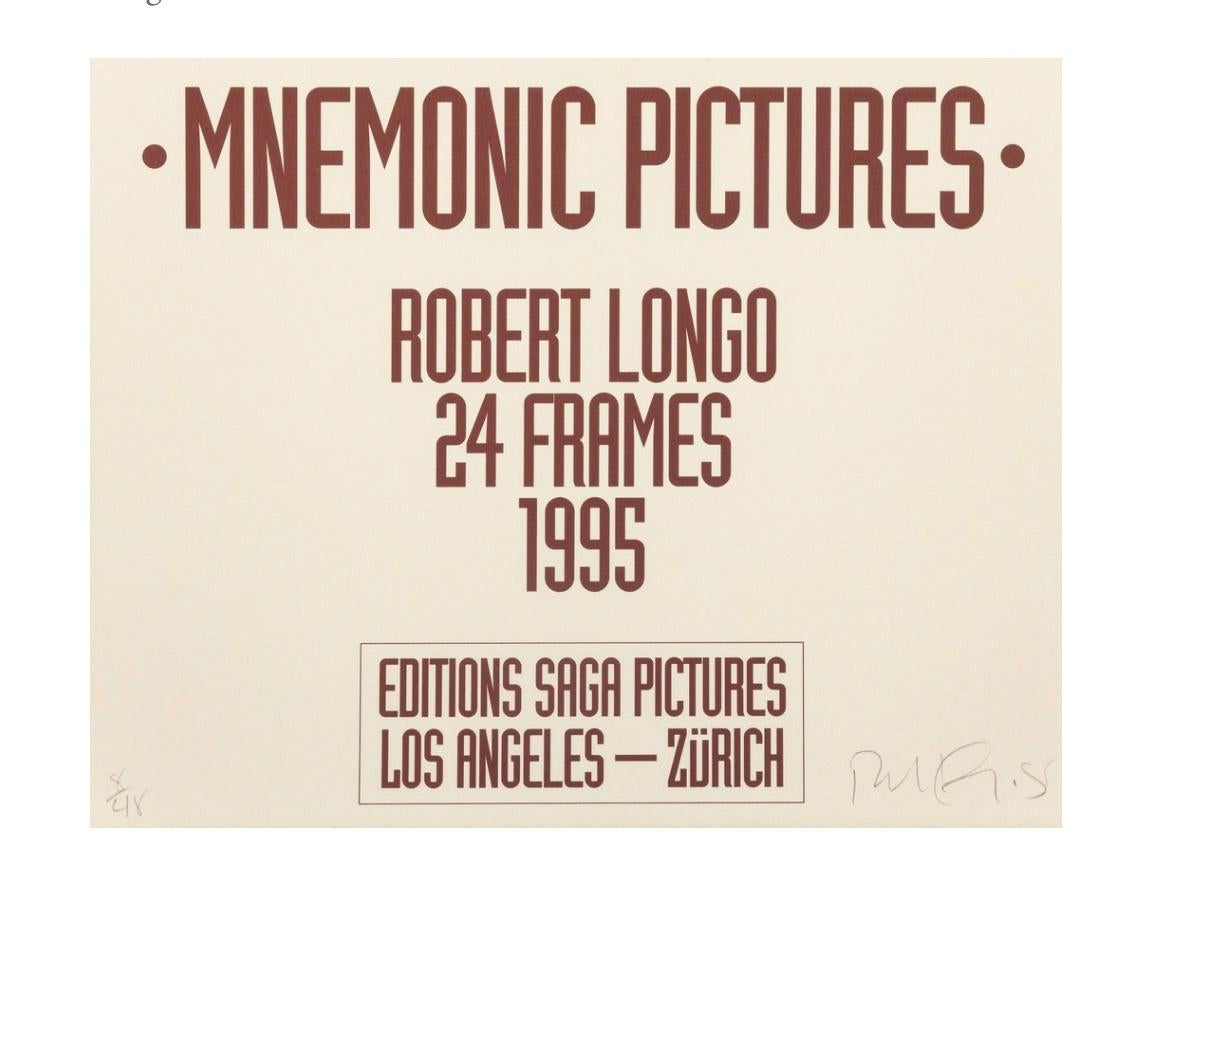 Robert Longo Portfolio Mnemonic Pictures, 1995 Lithograph Film Black and White 3